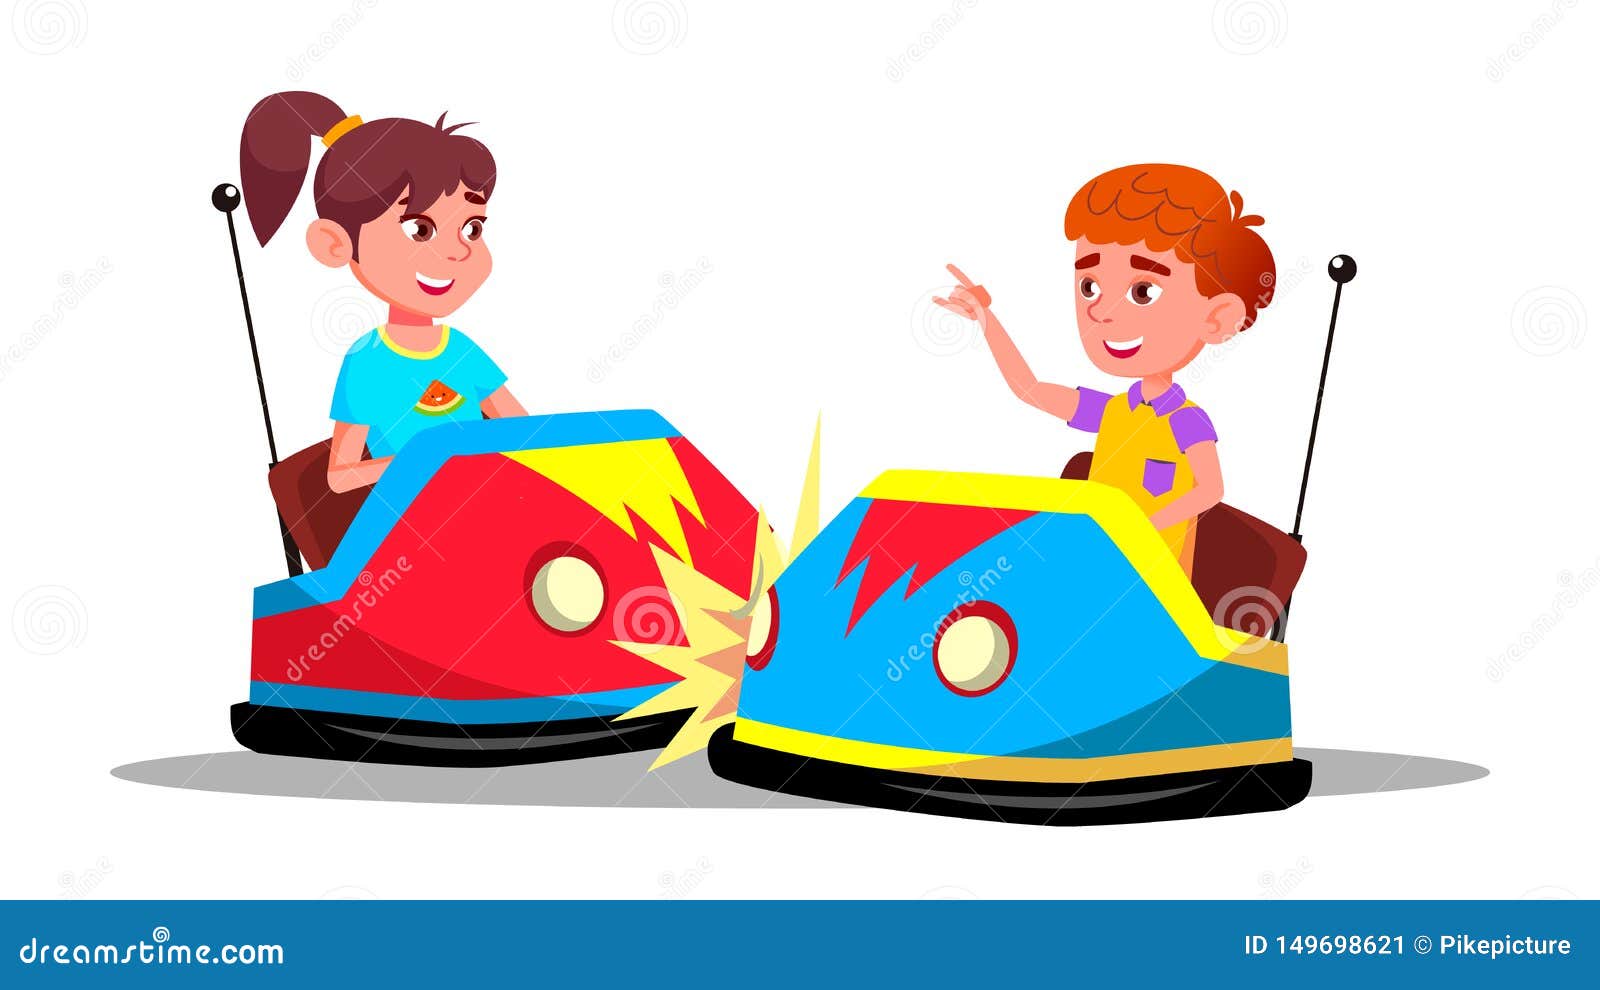 characters children driving bumper car 